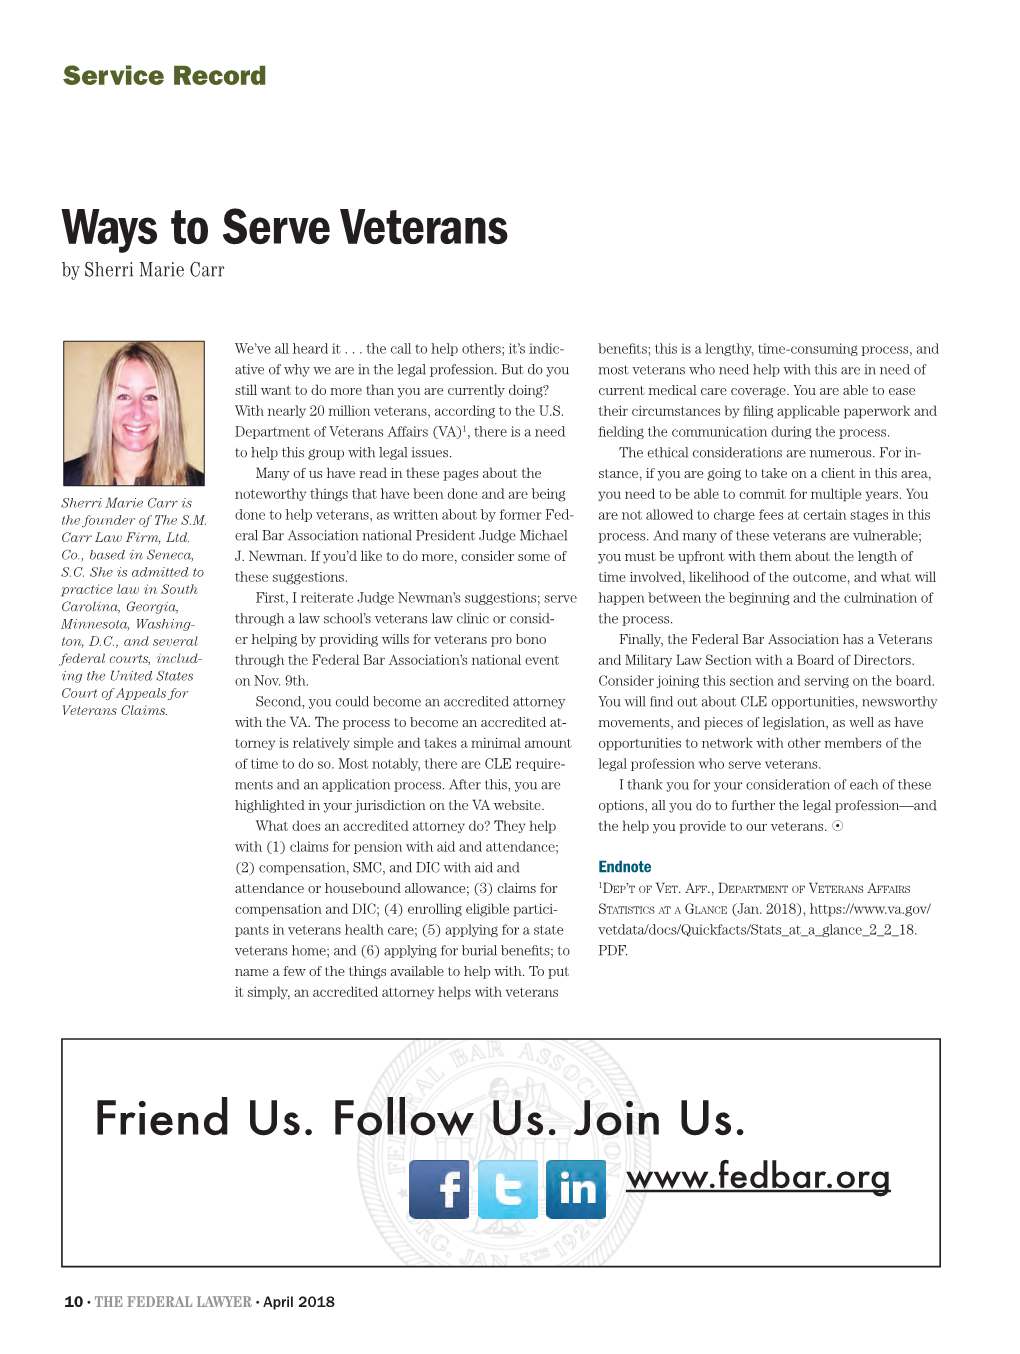 Ways to Serve Veterans by Sherri Marie Carr